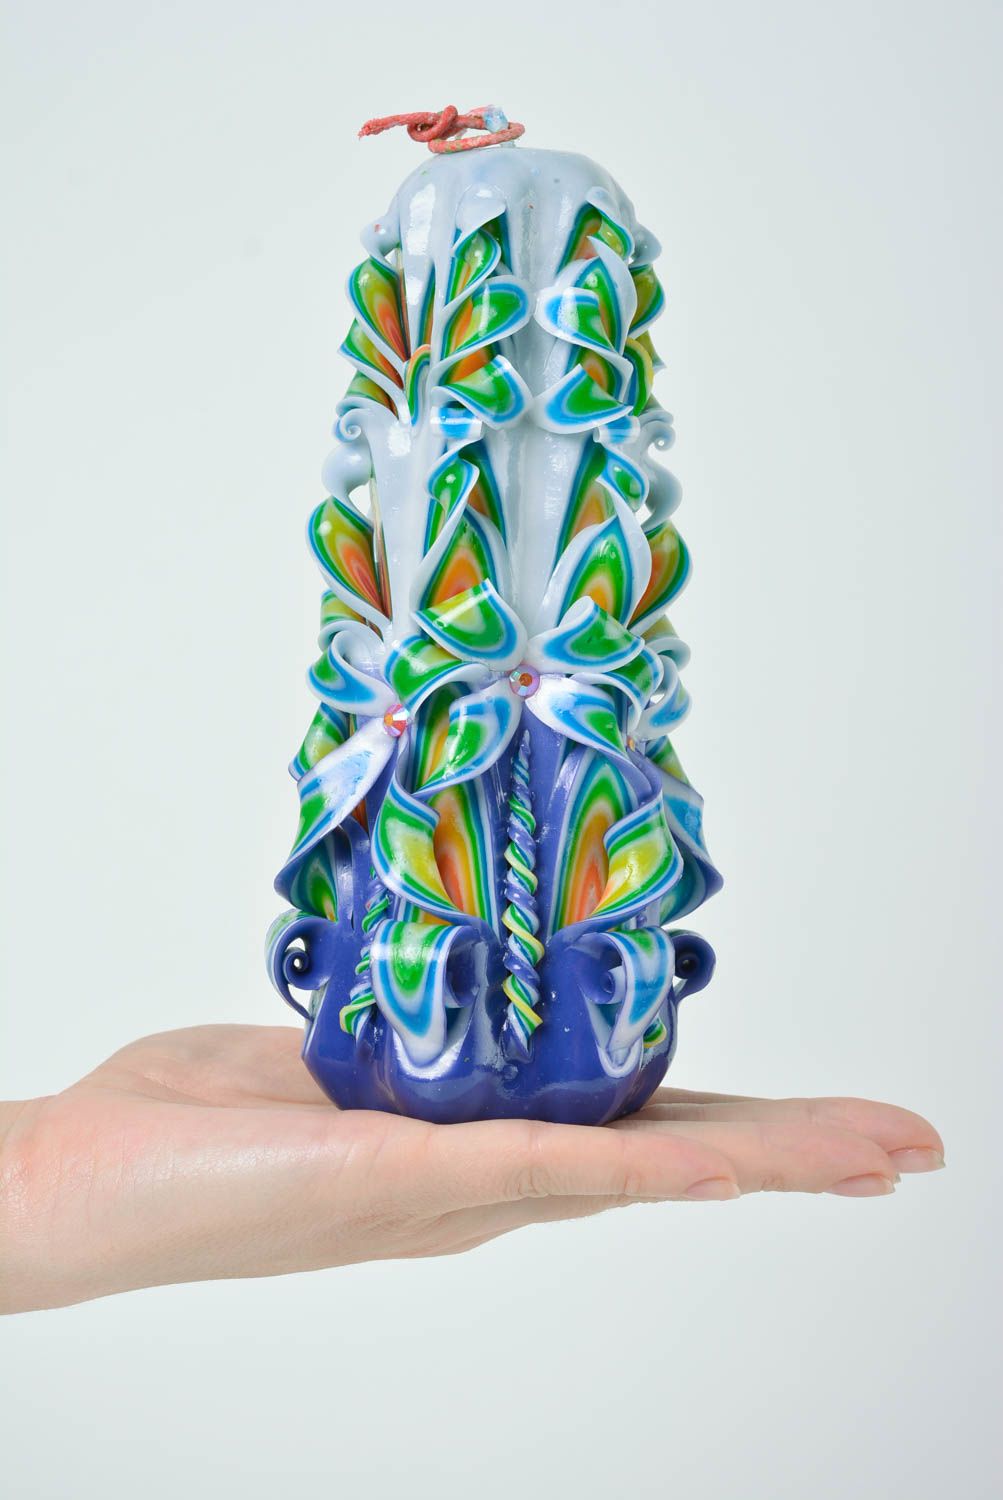 Bougie sculptée artisanale multicolore faite main grande originale décorative photo 4